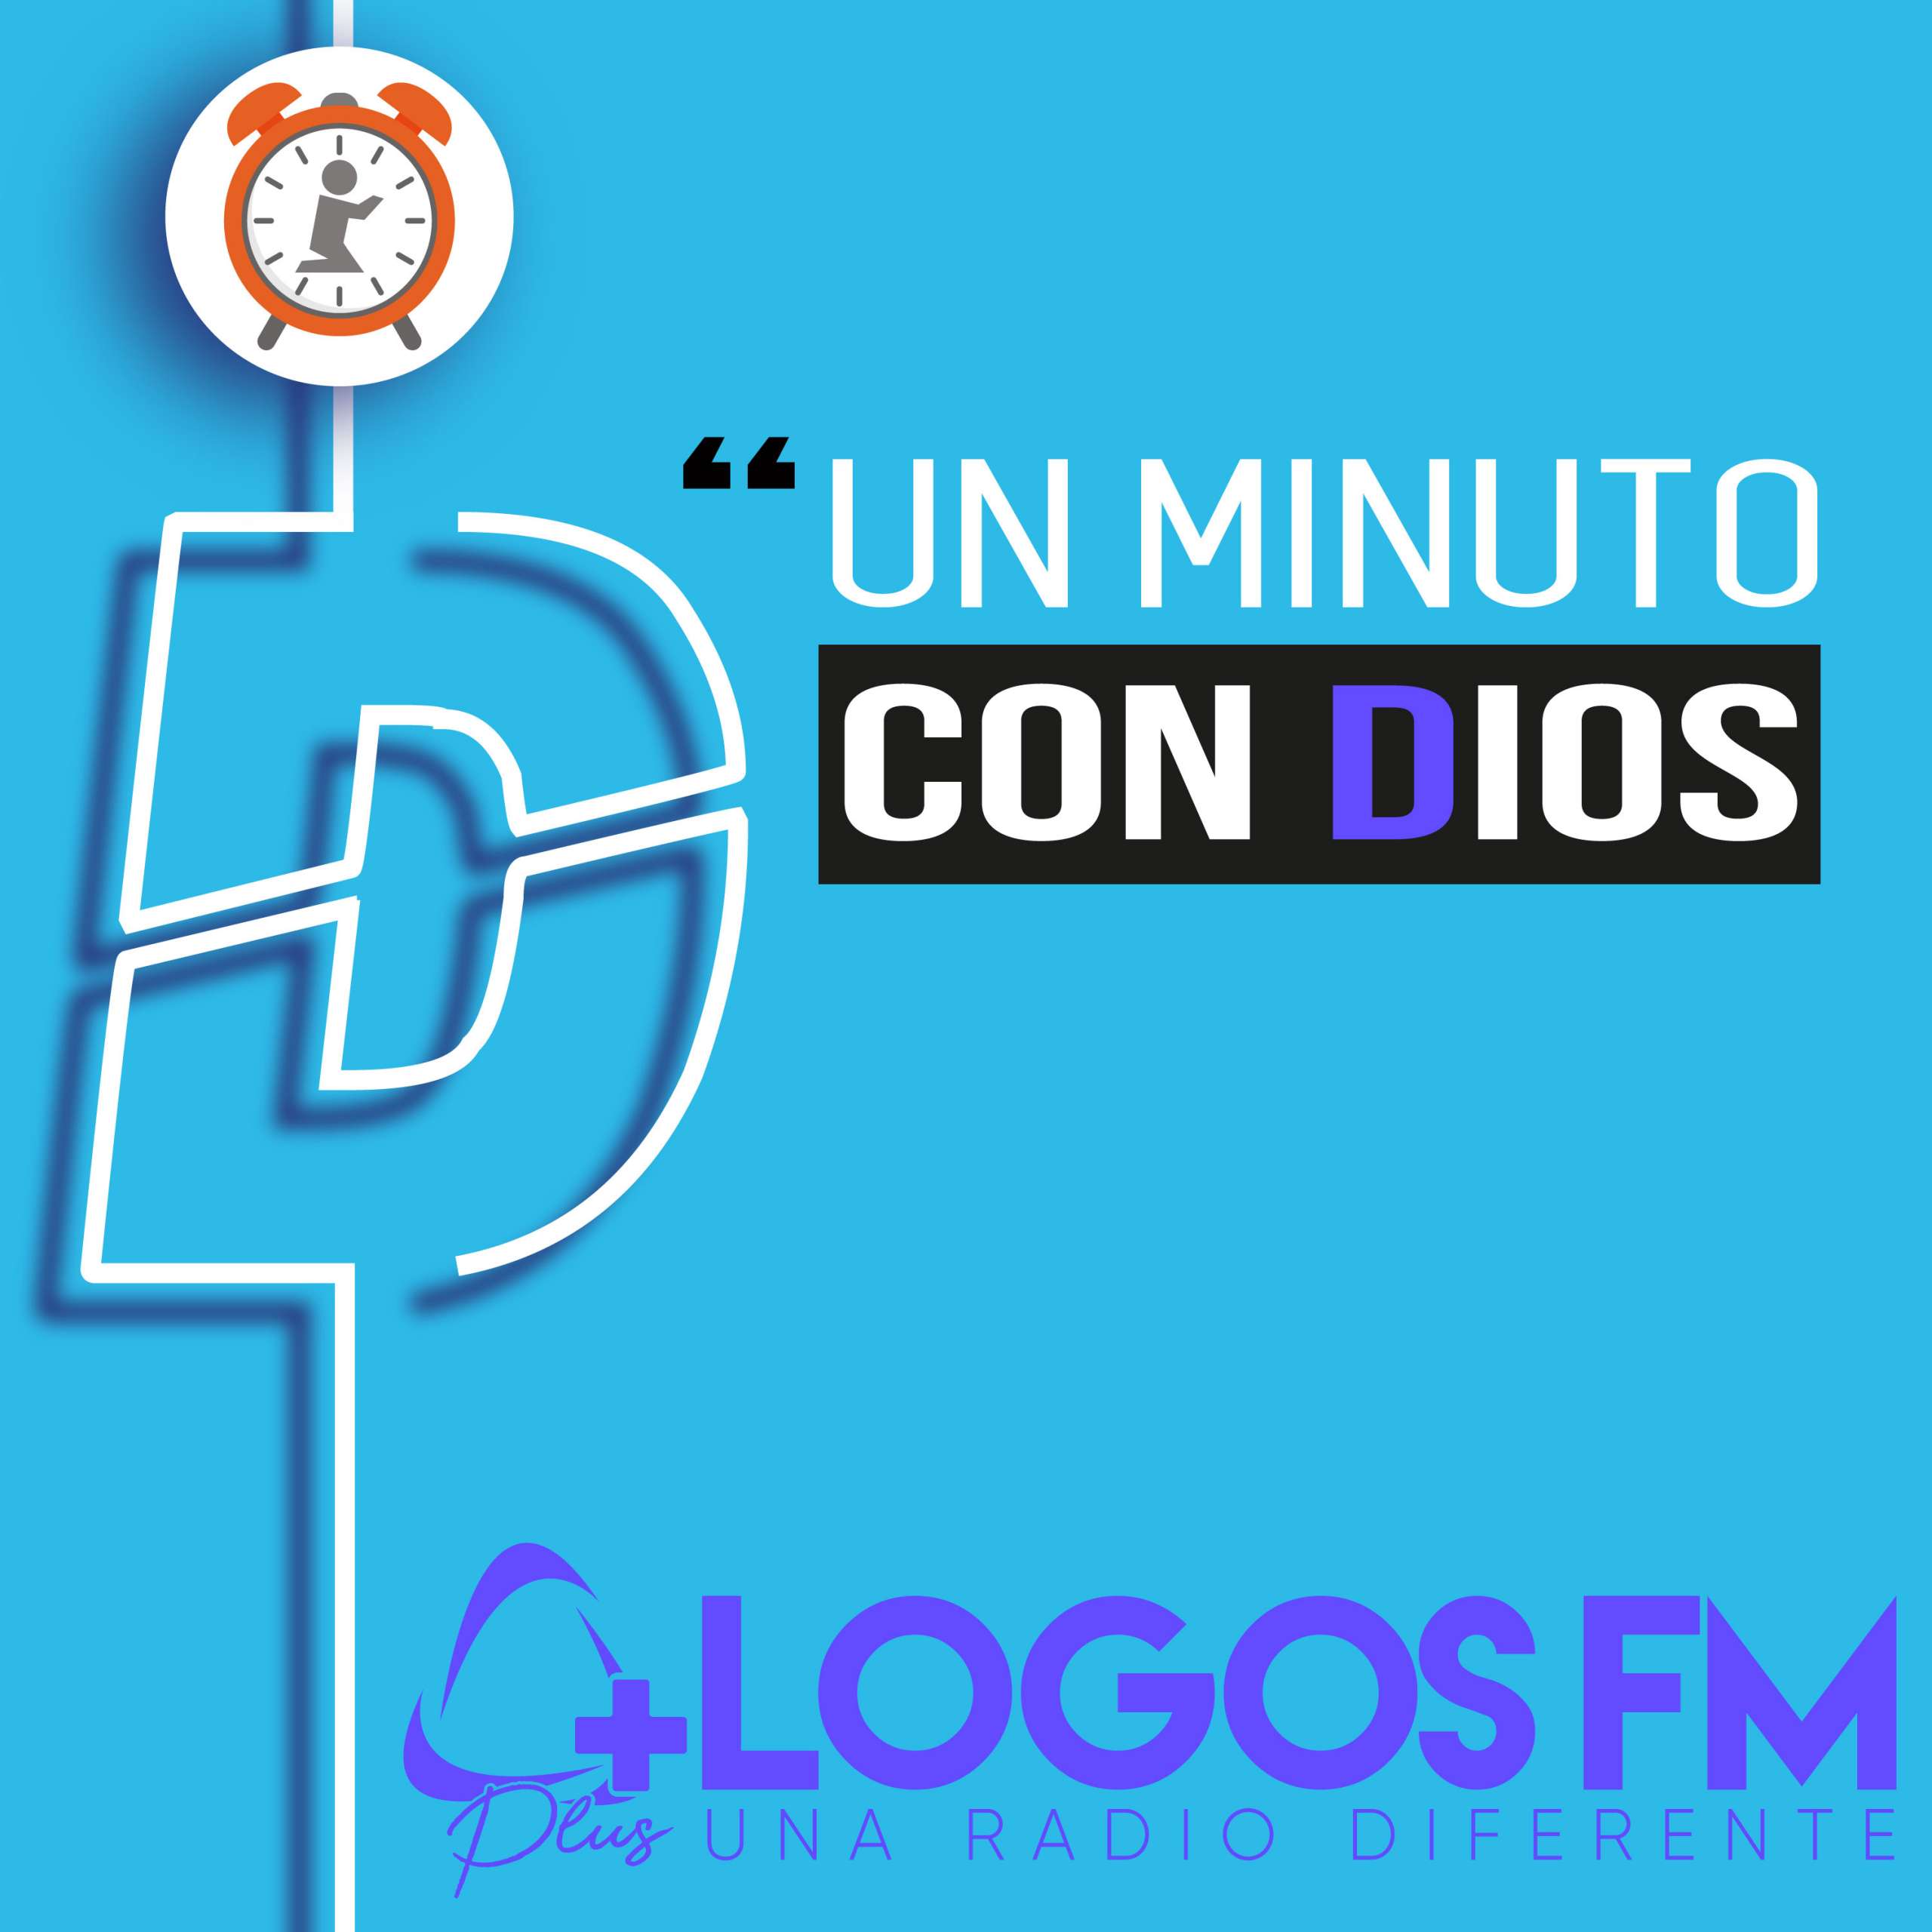 Un minuto con Dios - Episodio 426 - Loida Vargas